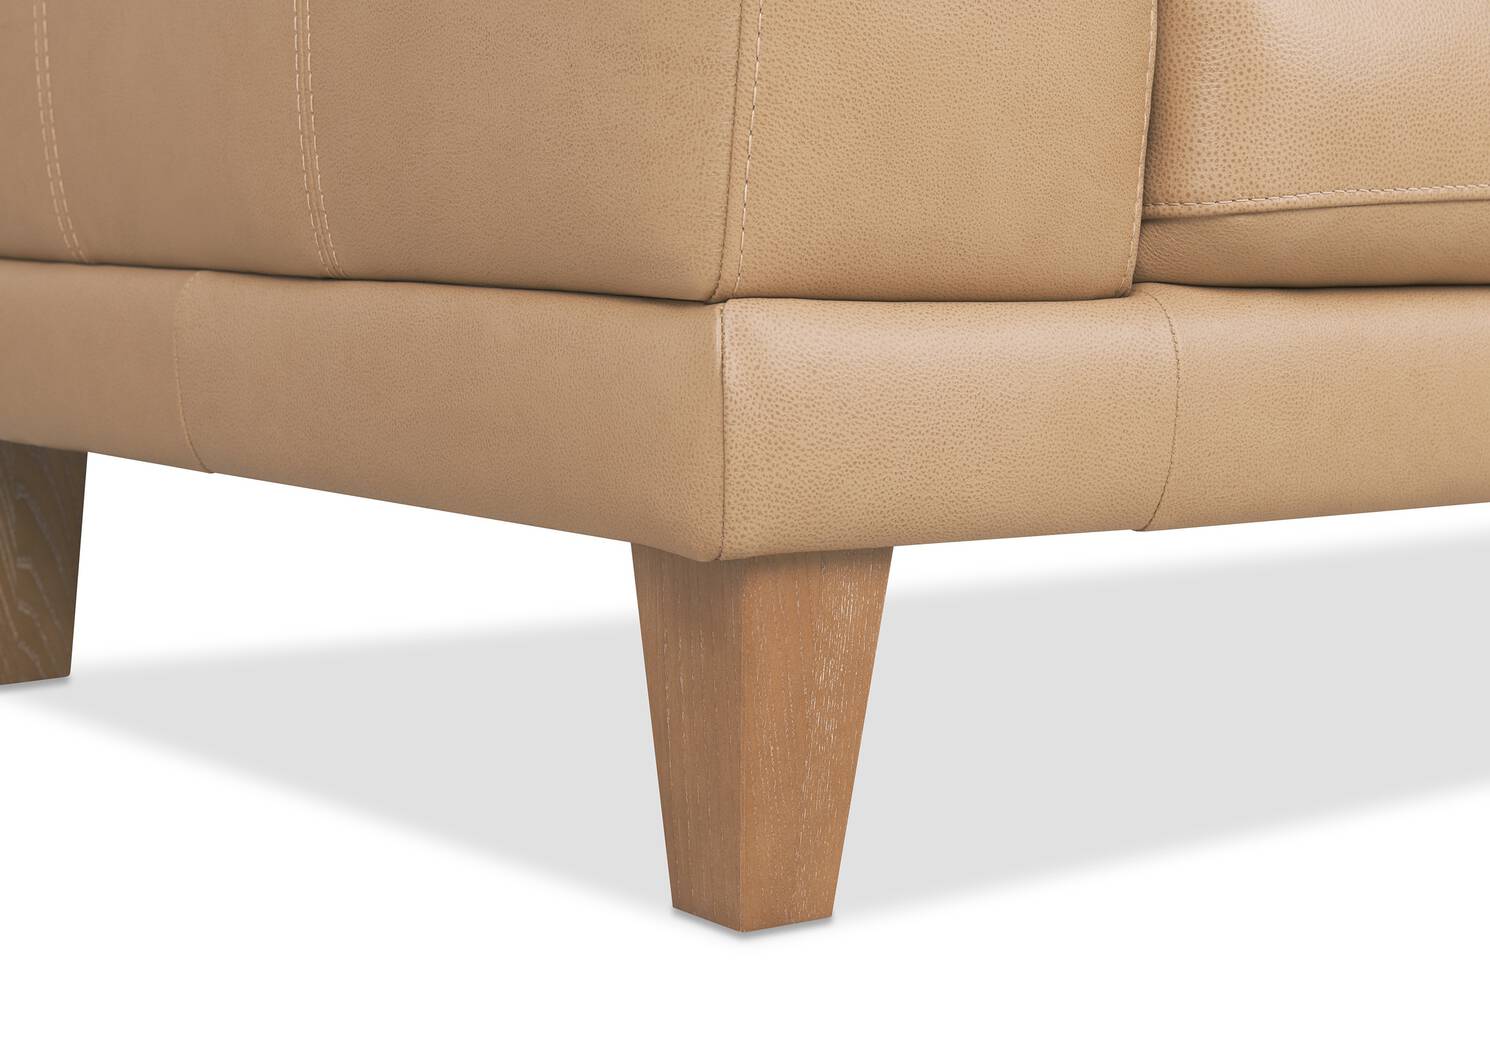 Carson Leather Sofa Chaise RCF -Zen Ston